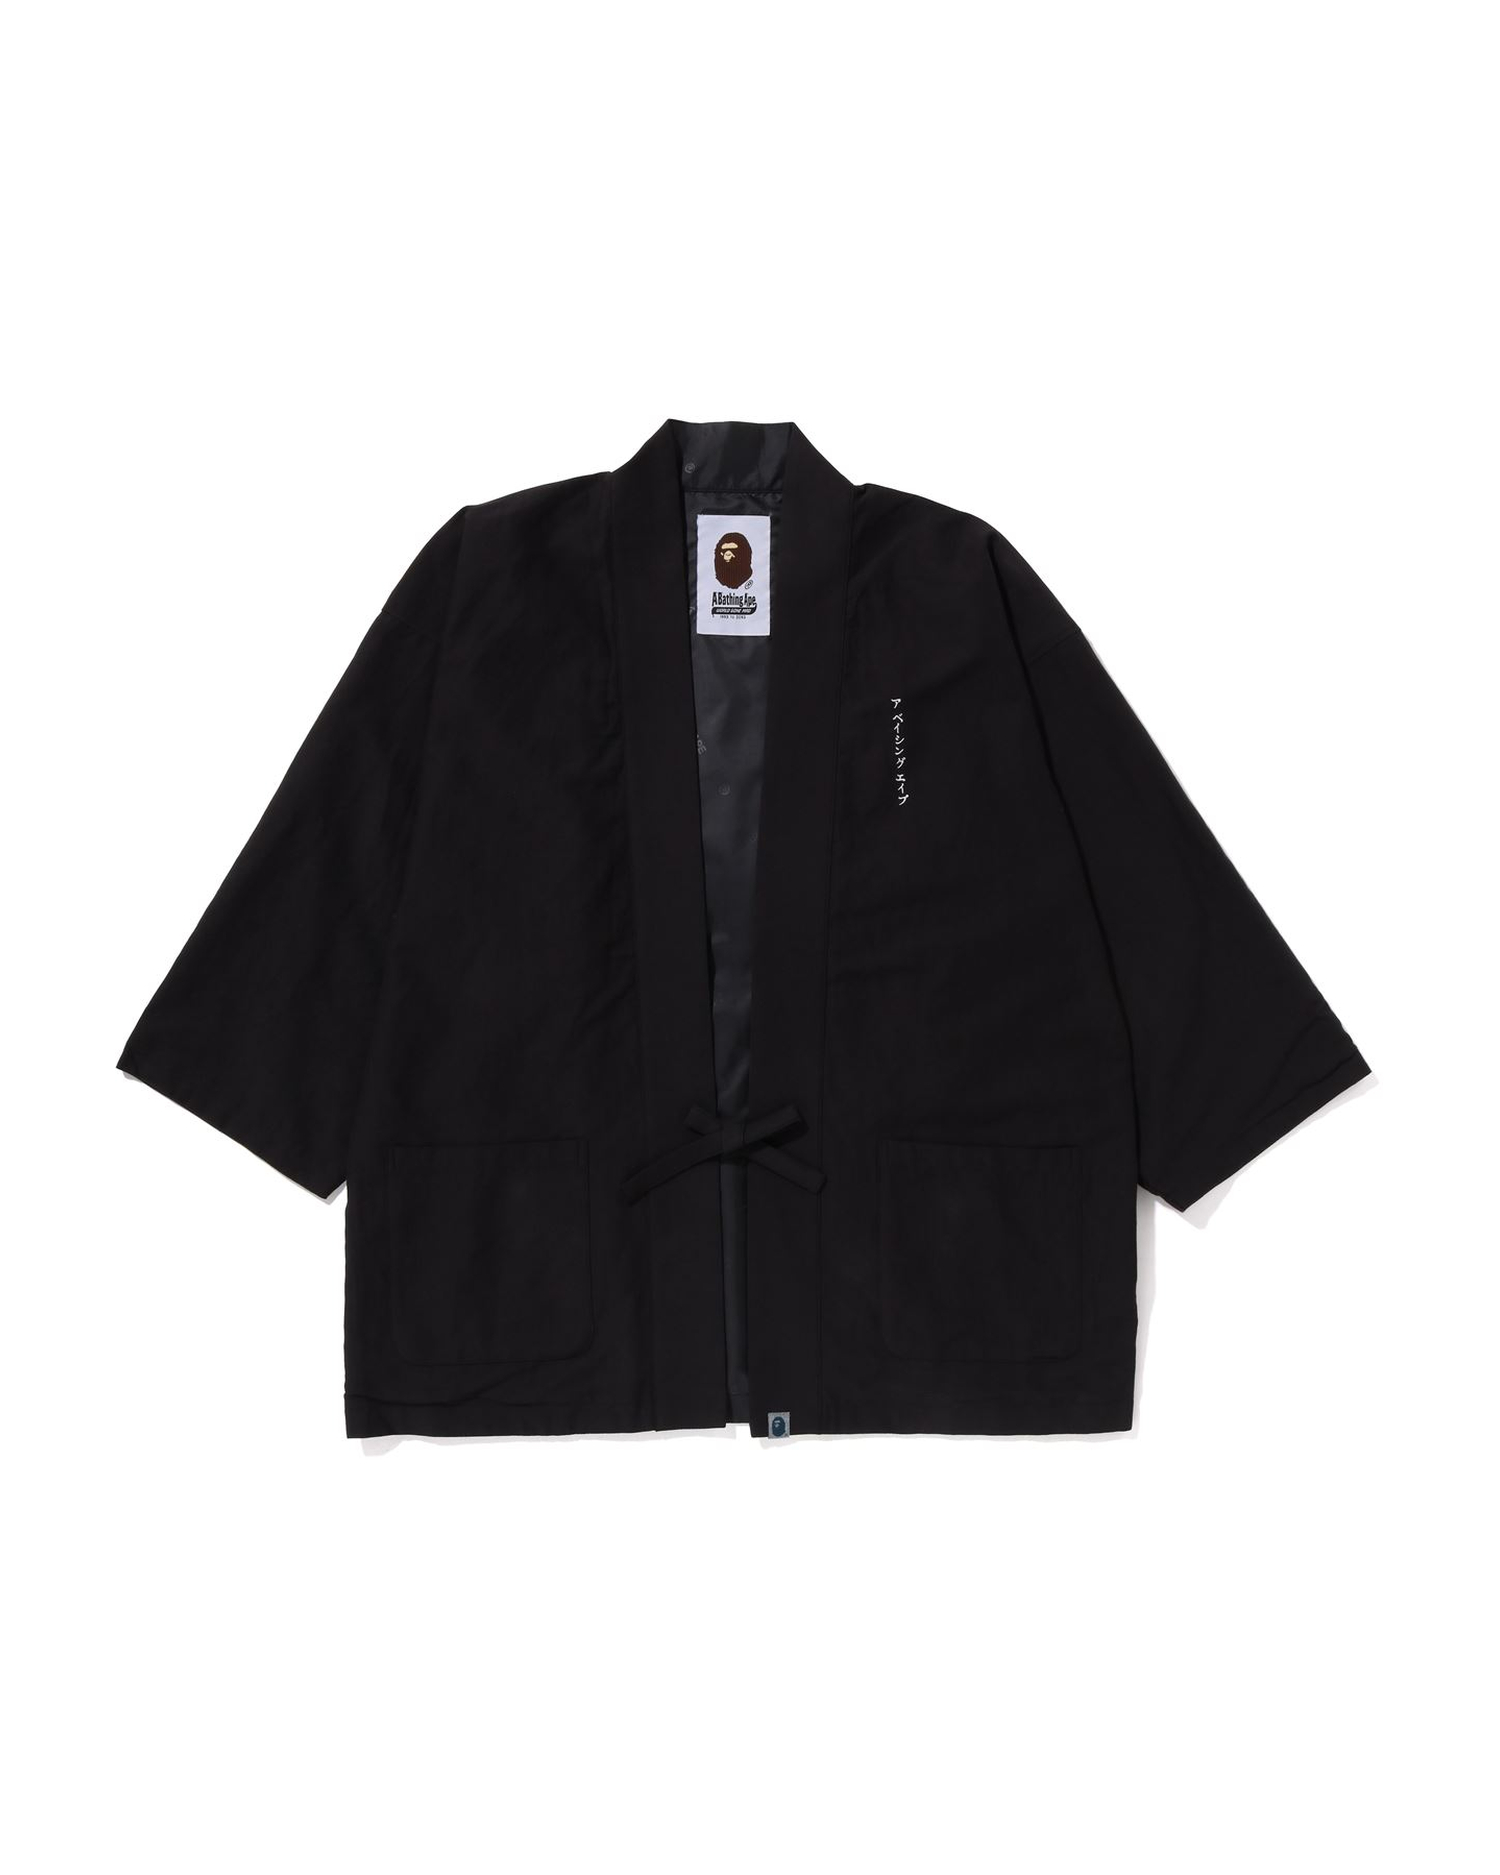 Shop Kimono Jacket Online | BAPE